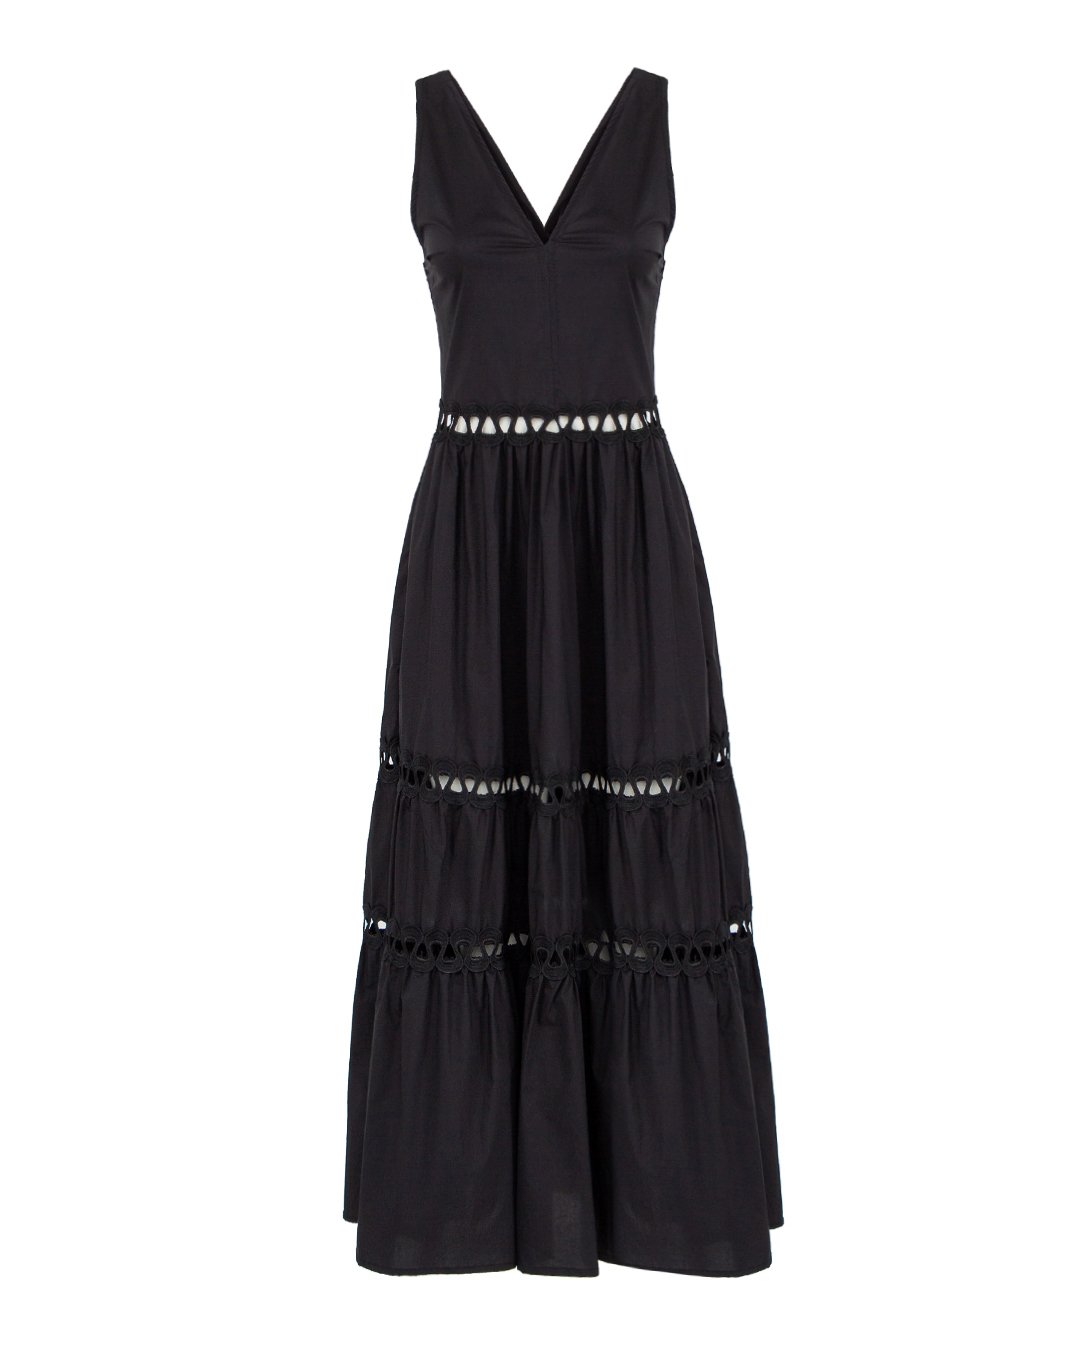 платье ICONA BY KAOS PP5LE008 черный 40, размер 40 - фото 1